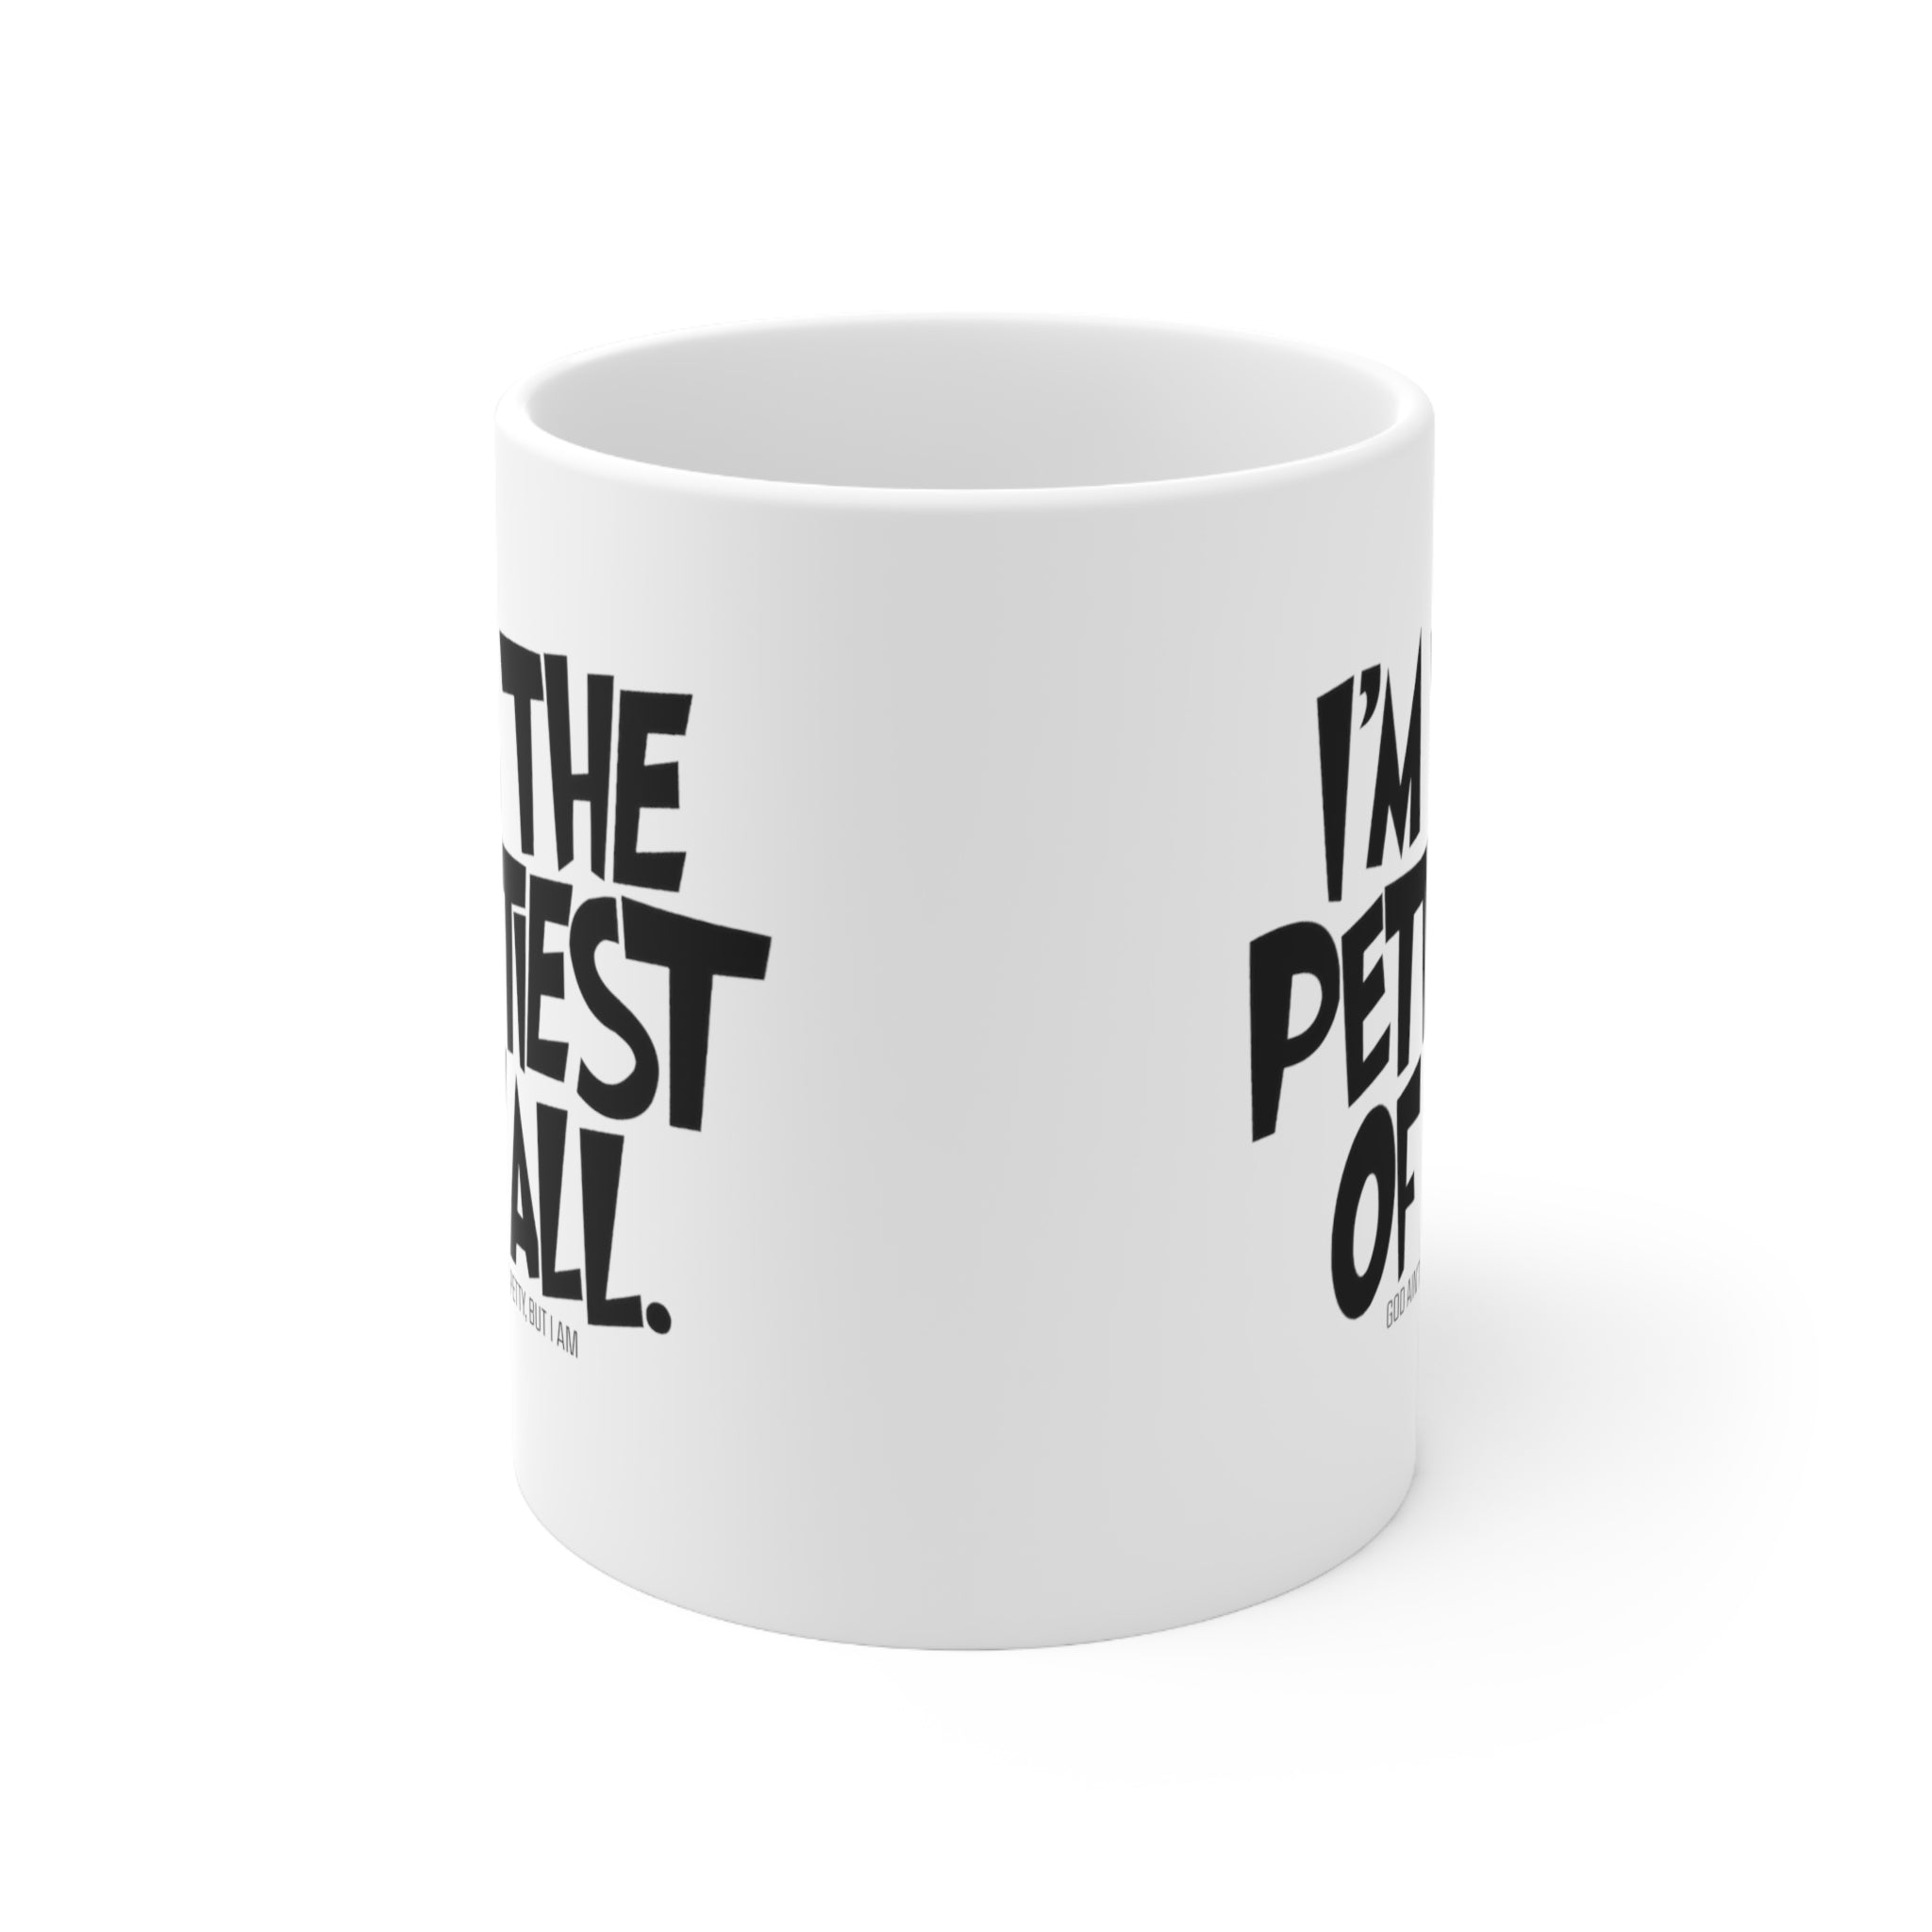 I'm the Pettiest of All Mug 11oz (White & Black )-Mug-The Original God Ain't Petty But I Am